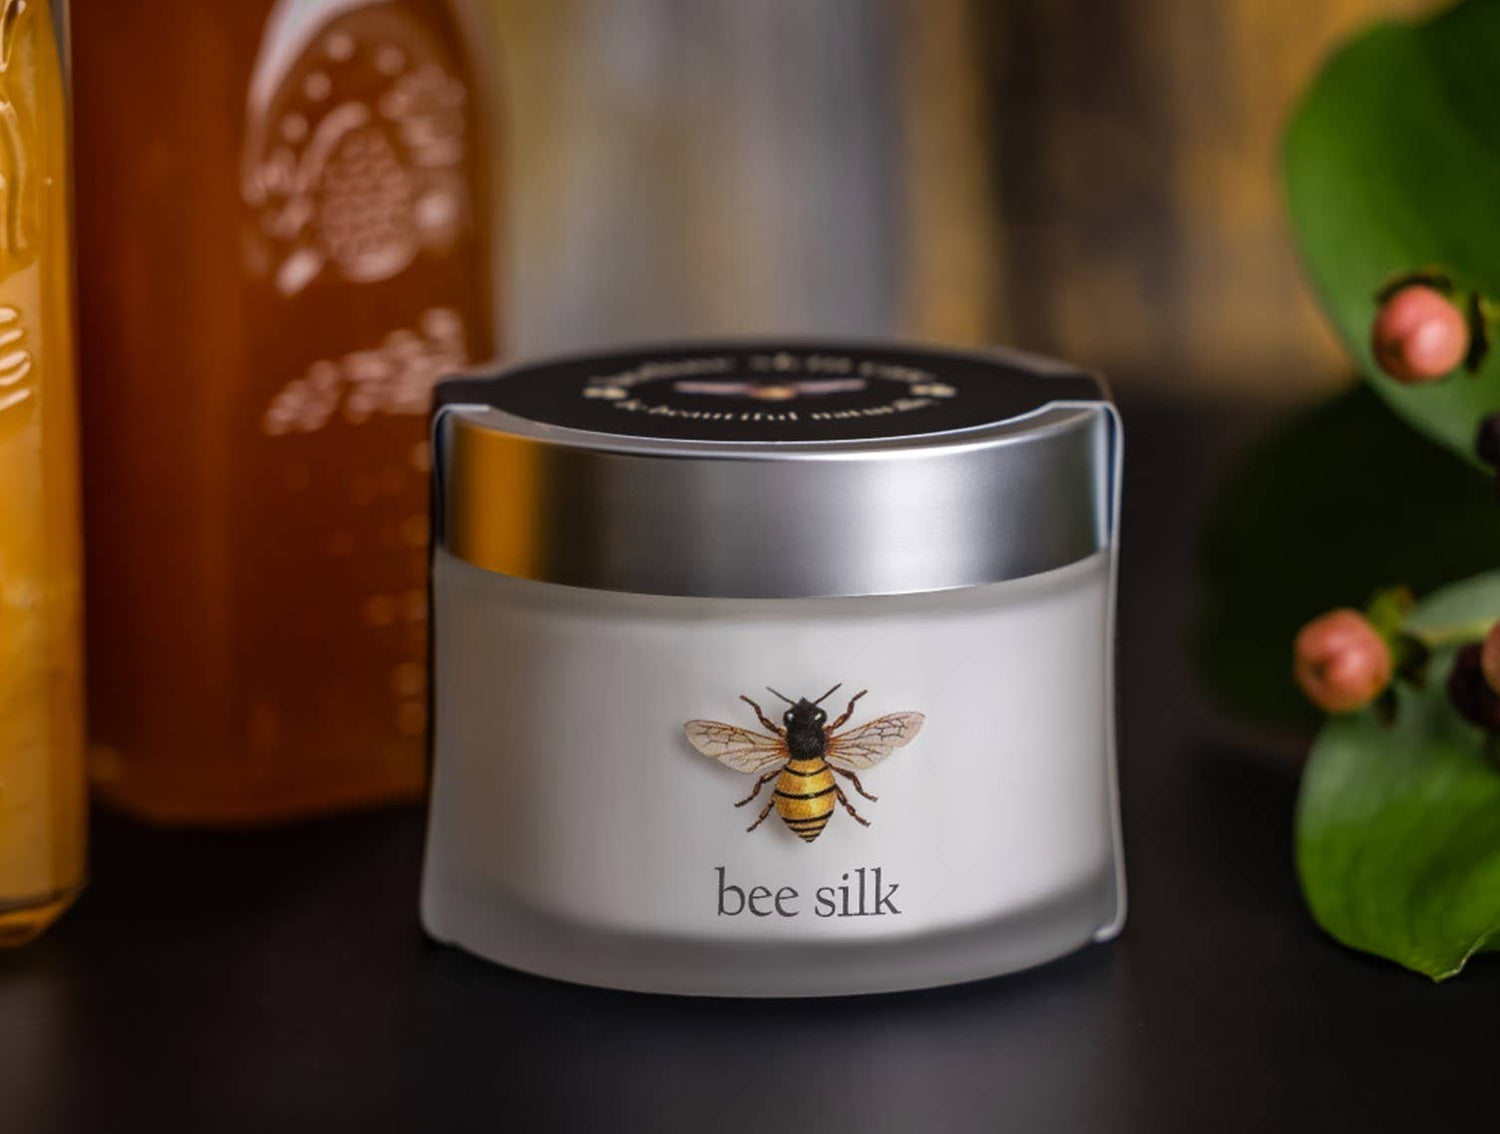 Bee Silk - powerful moisturizing cream for face & body.